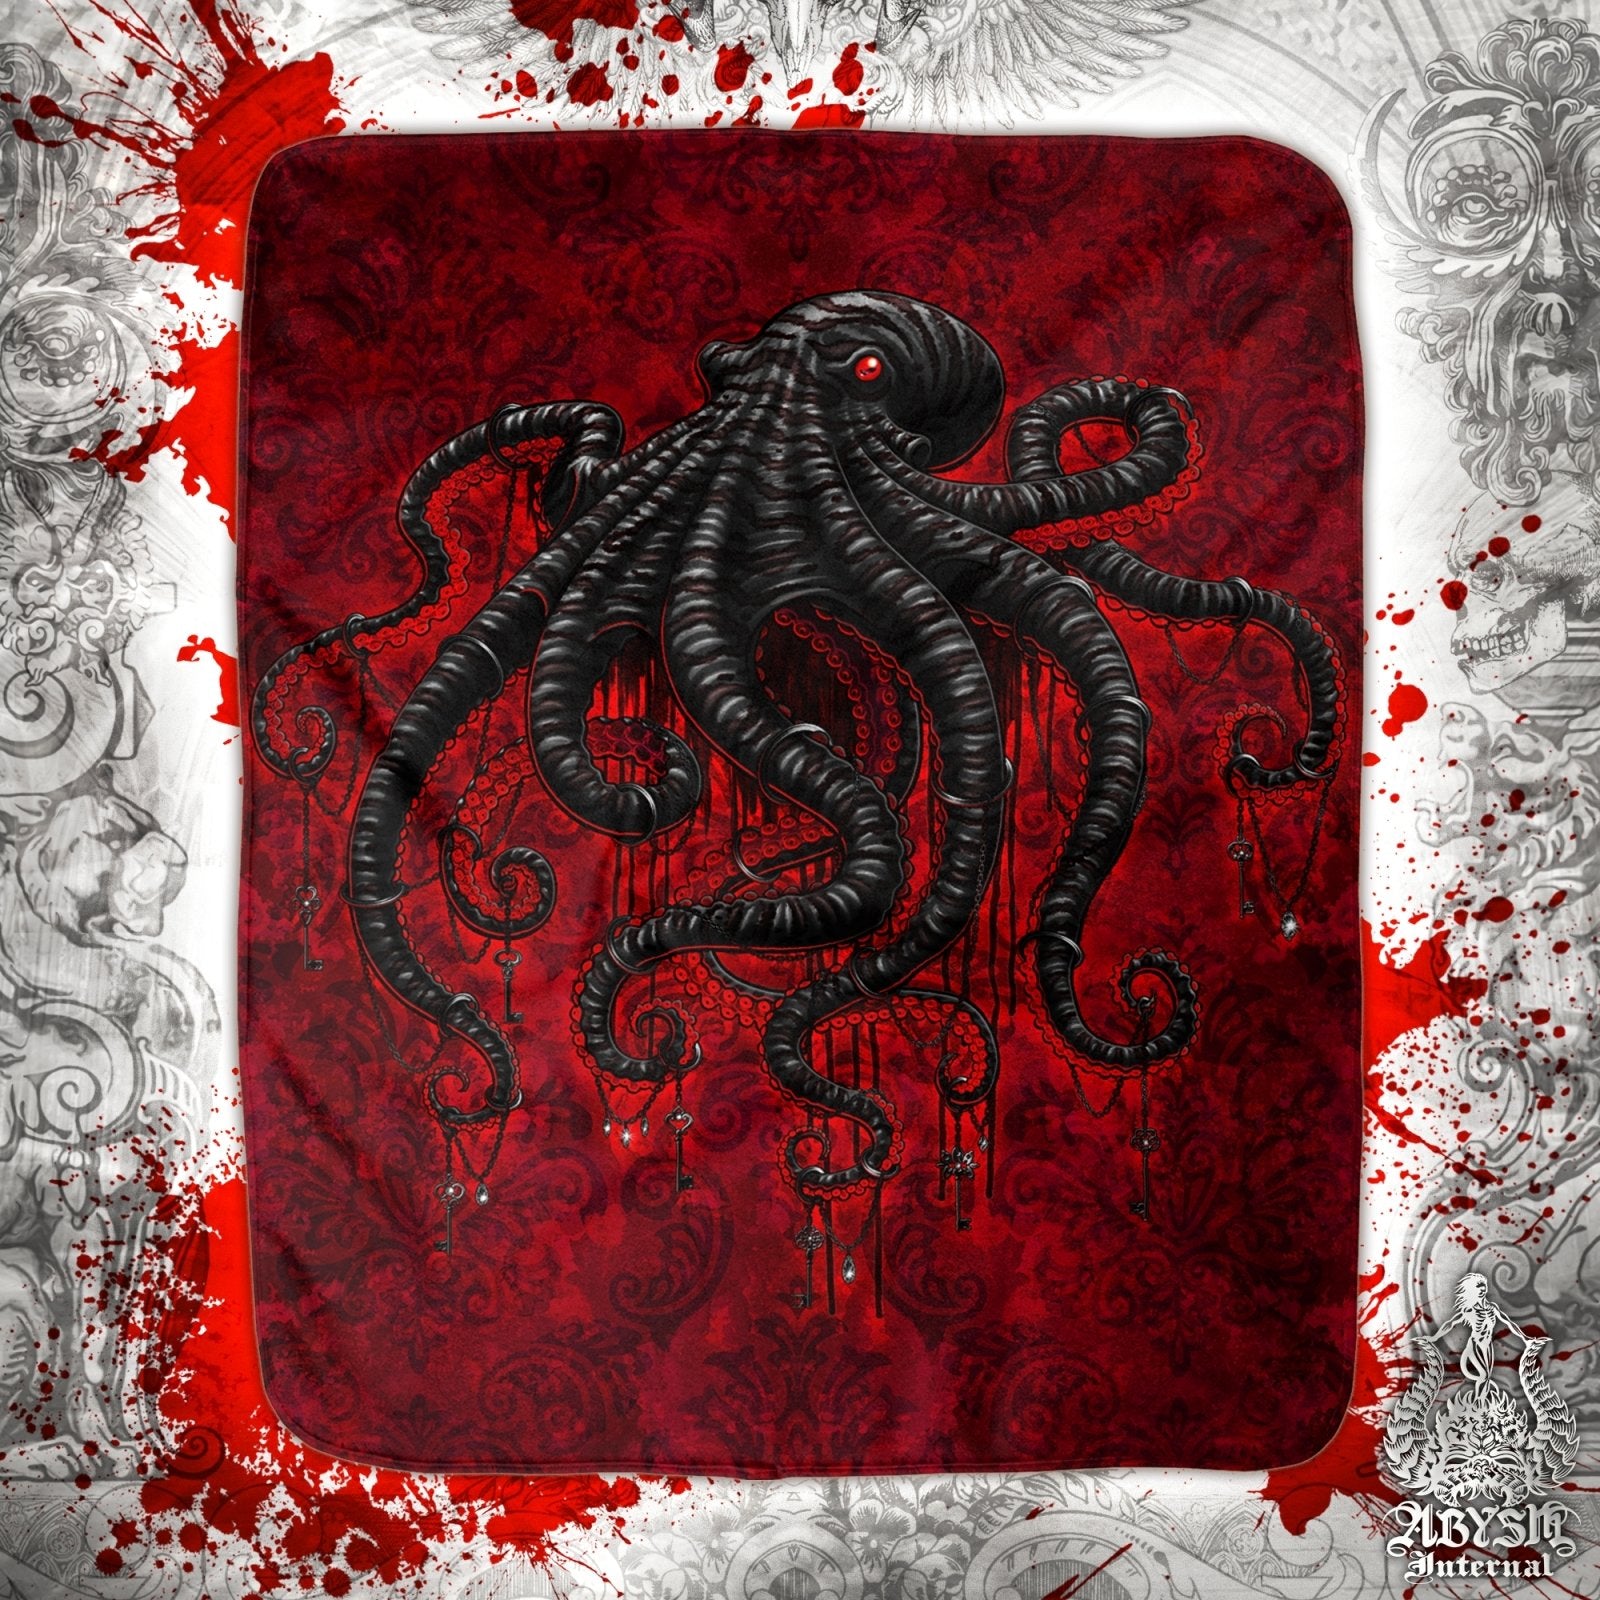 Gothic Throw Fleece Blanket, Goth Gift, Coastal Home Decor, Alternative Art Gift - Bloody Red, Black Octopus - Abysm Internal